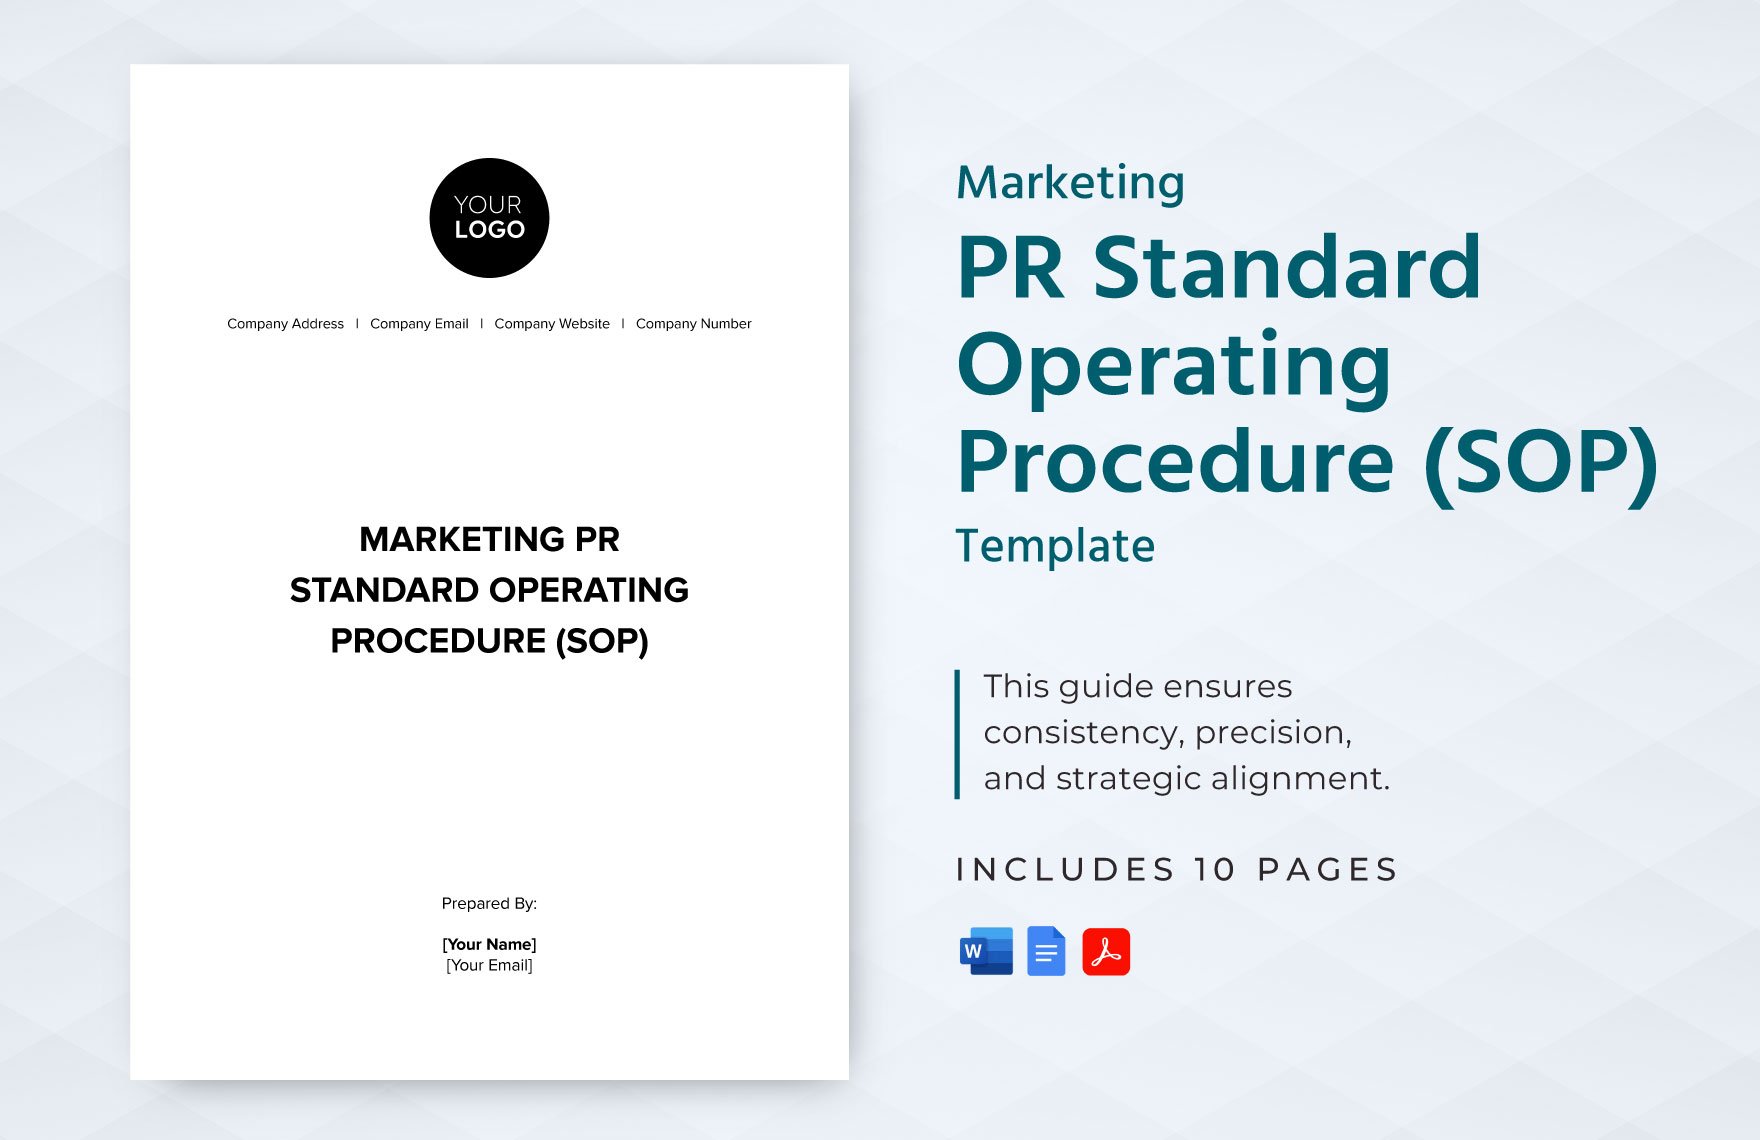 Marketing PR Standard Operating Procedure (SOP) Template